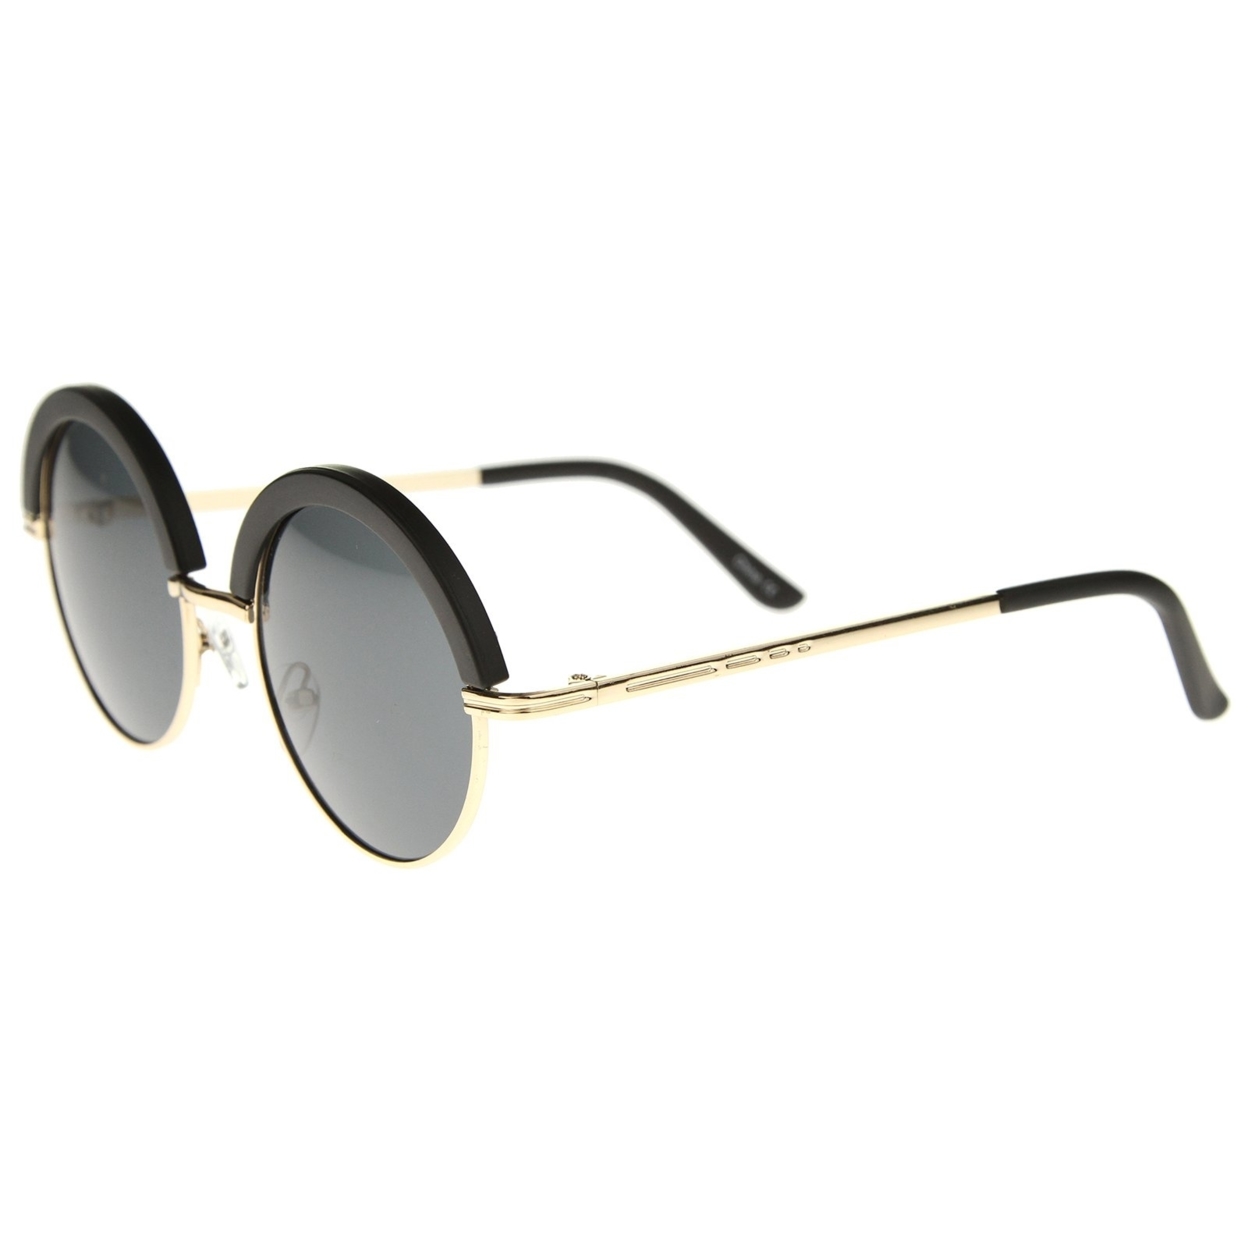 Mod Fashion Oversize Half-Frame Brow Eyelid Round Sunglasses 50mm - Shiny Tortoise-Gold / Brown